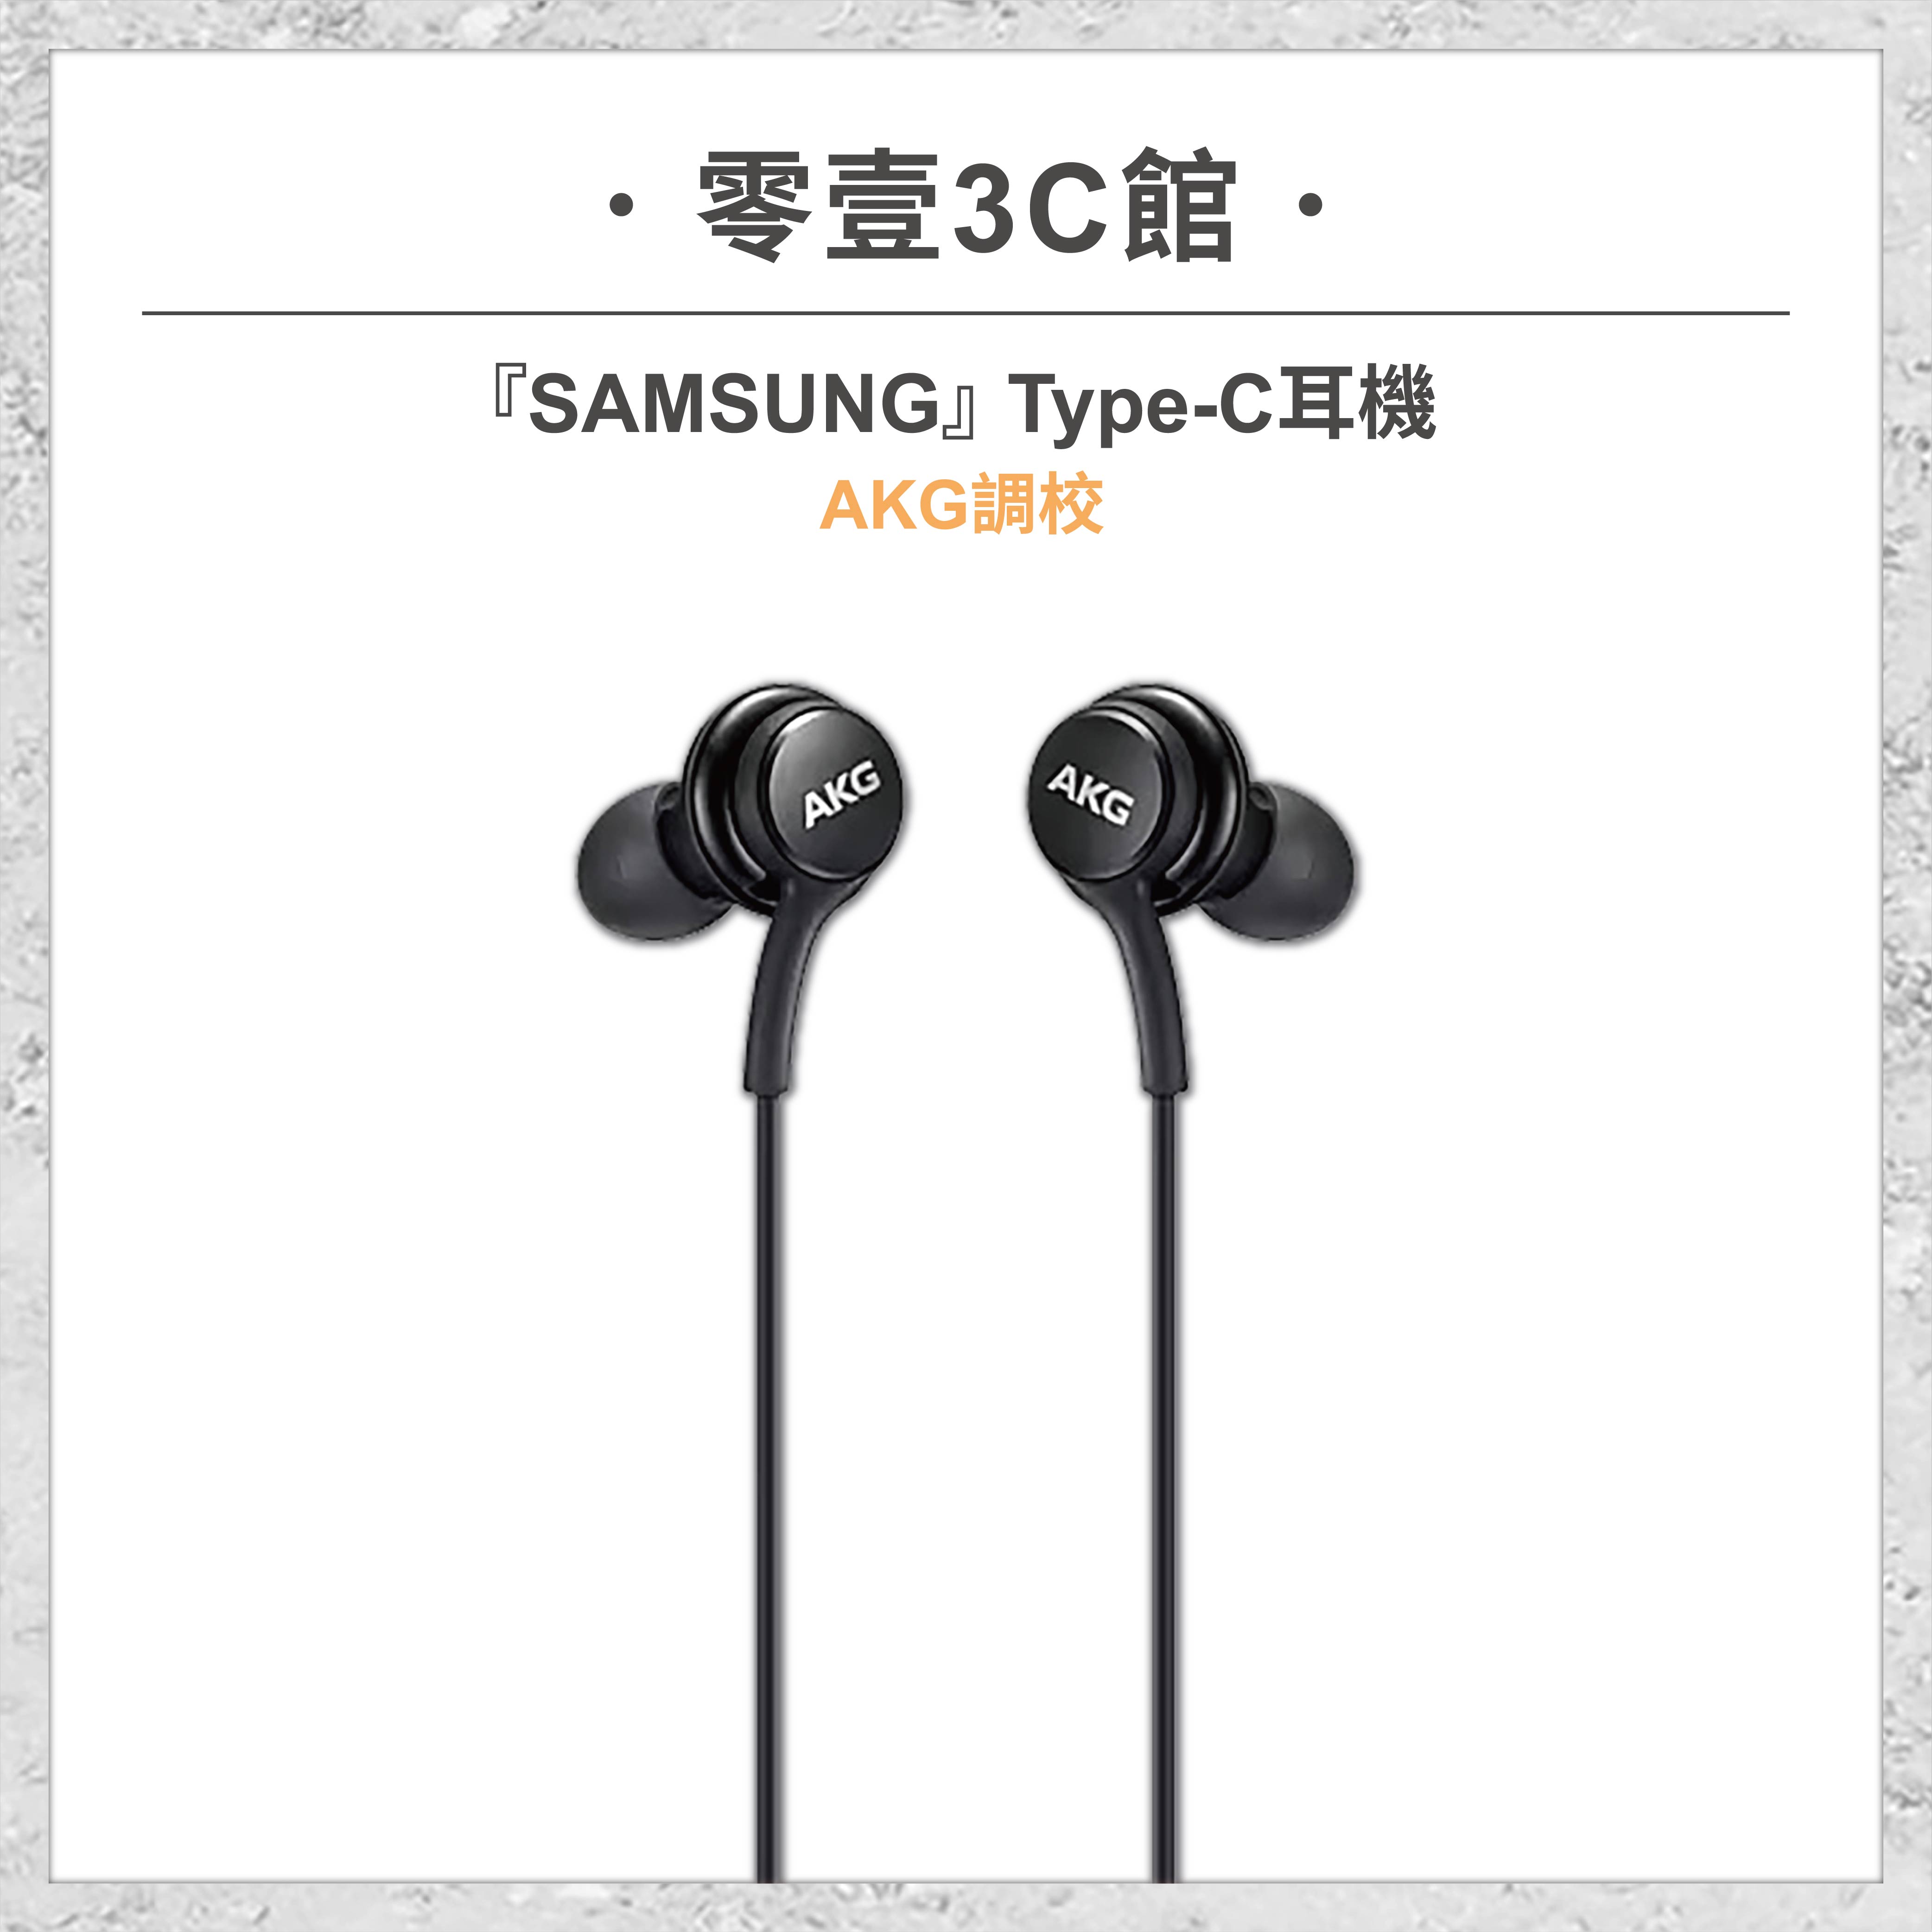 『SAMSUNG』Type-C 耳機(AKG調校) 原廠有線耳機